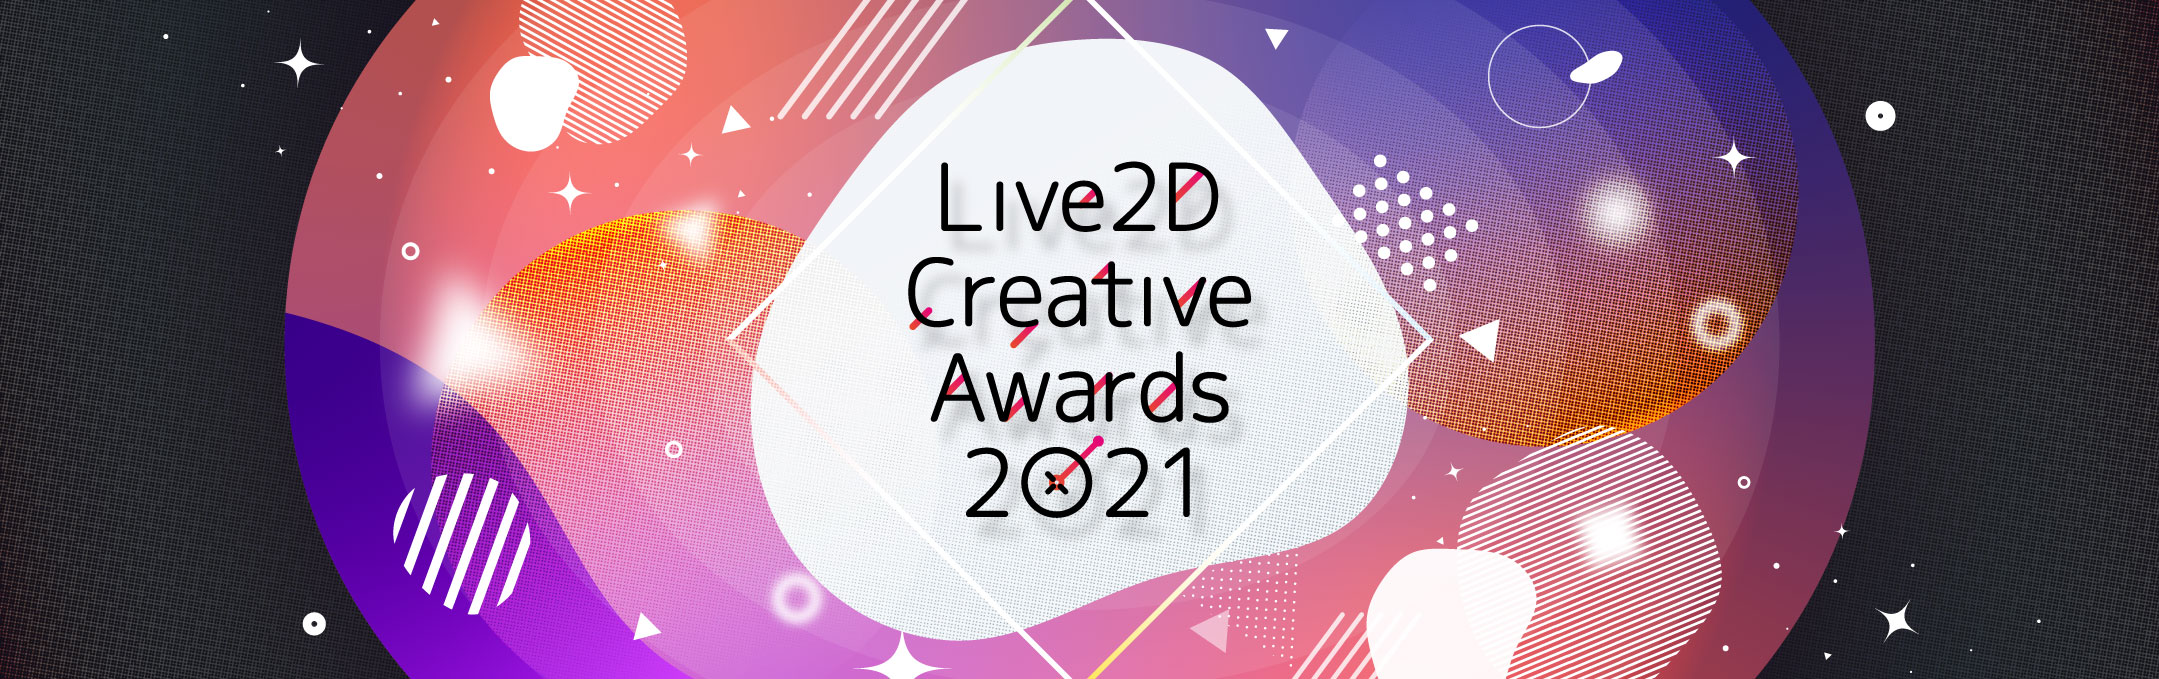 Live2D Creative Awards 2021